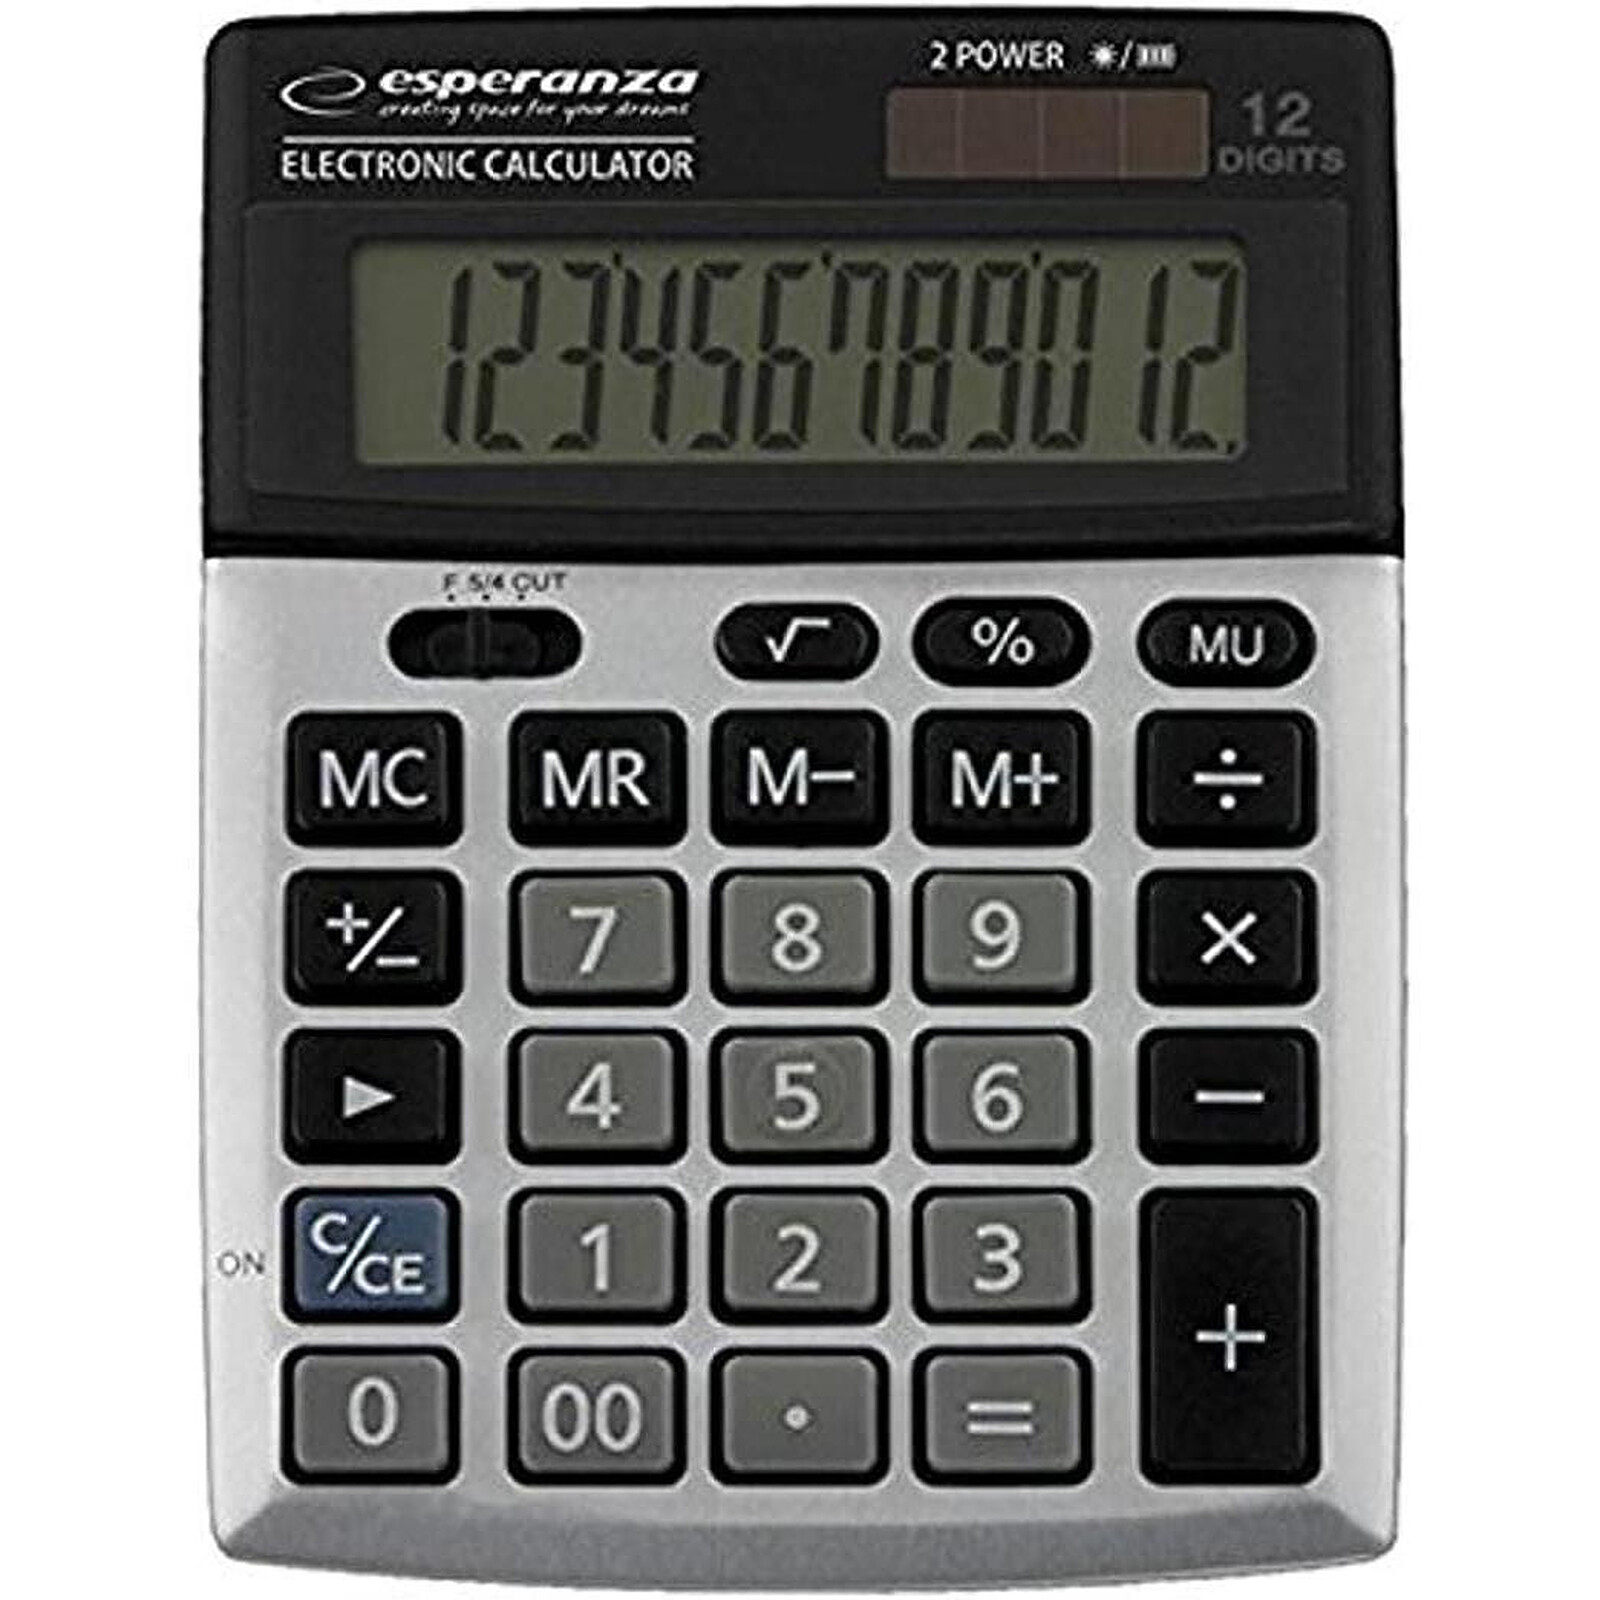 Calculatrice de bureau solaire - 12 chiffres CANON TX-1210E